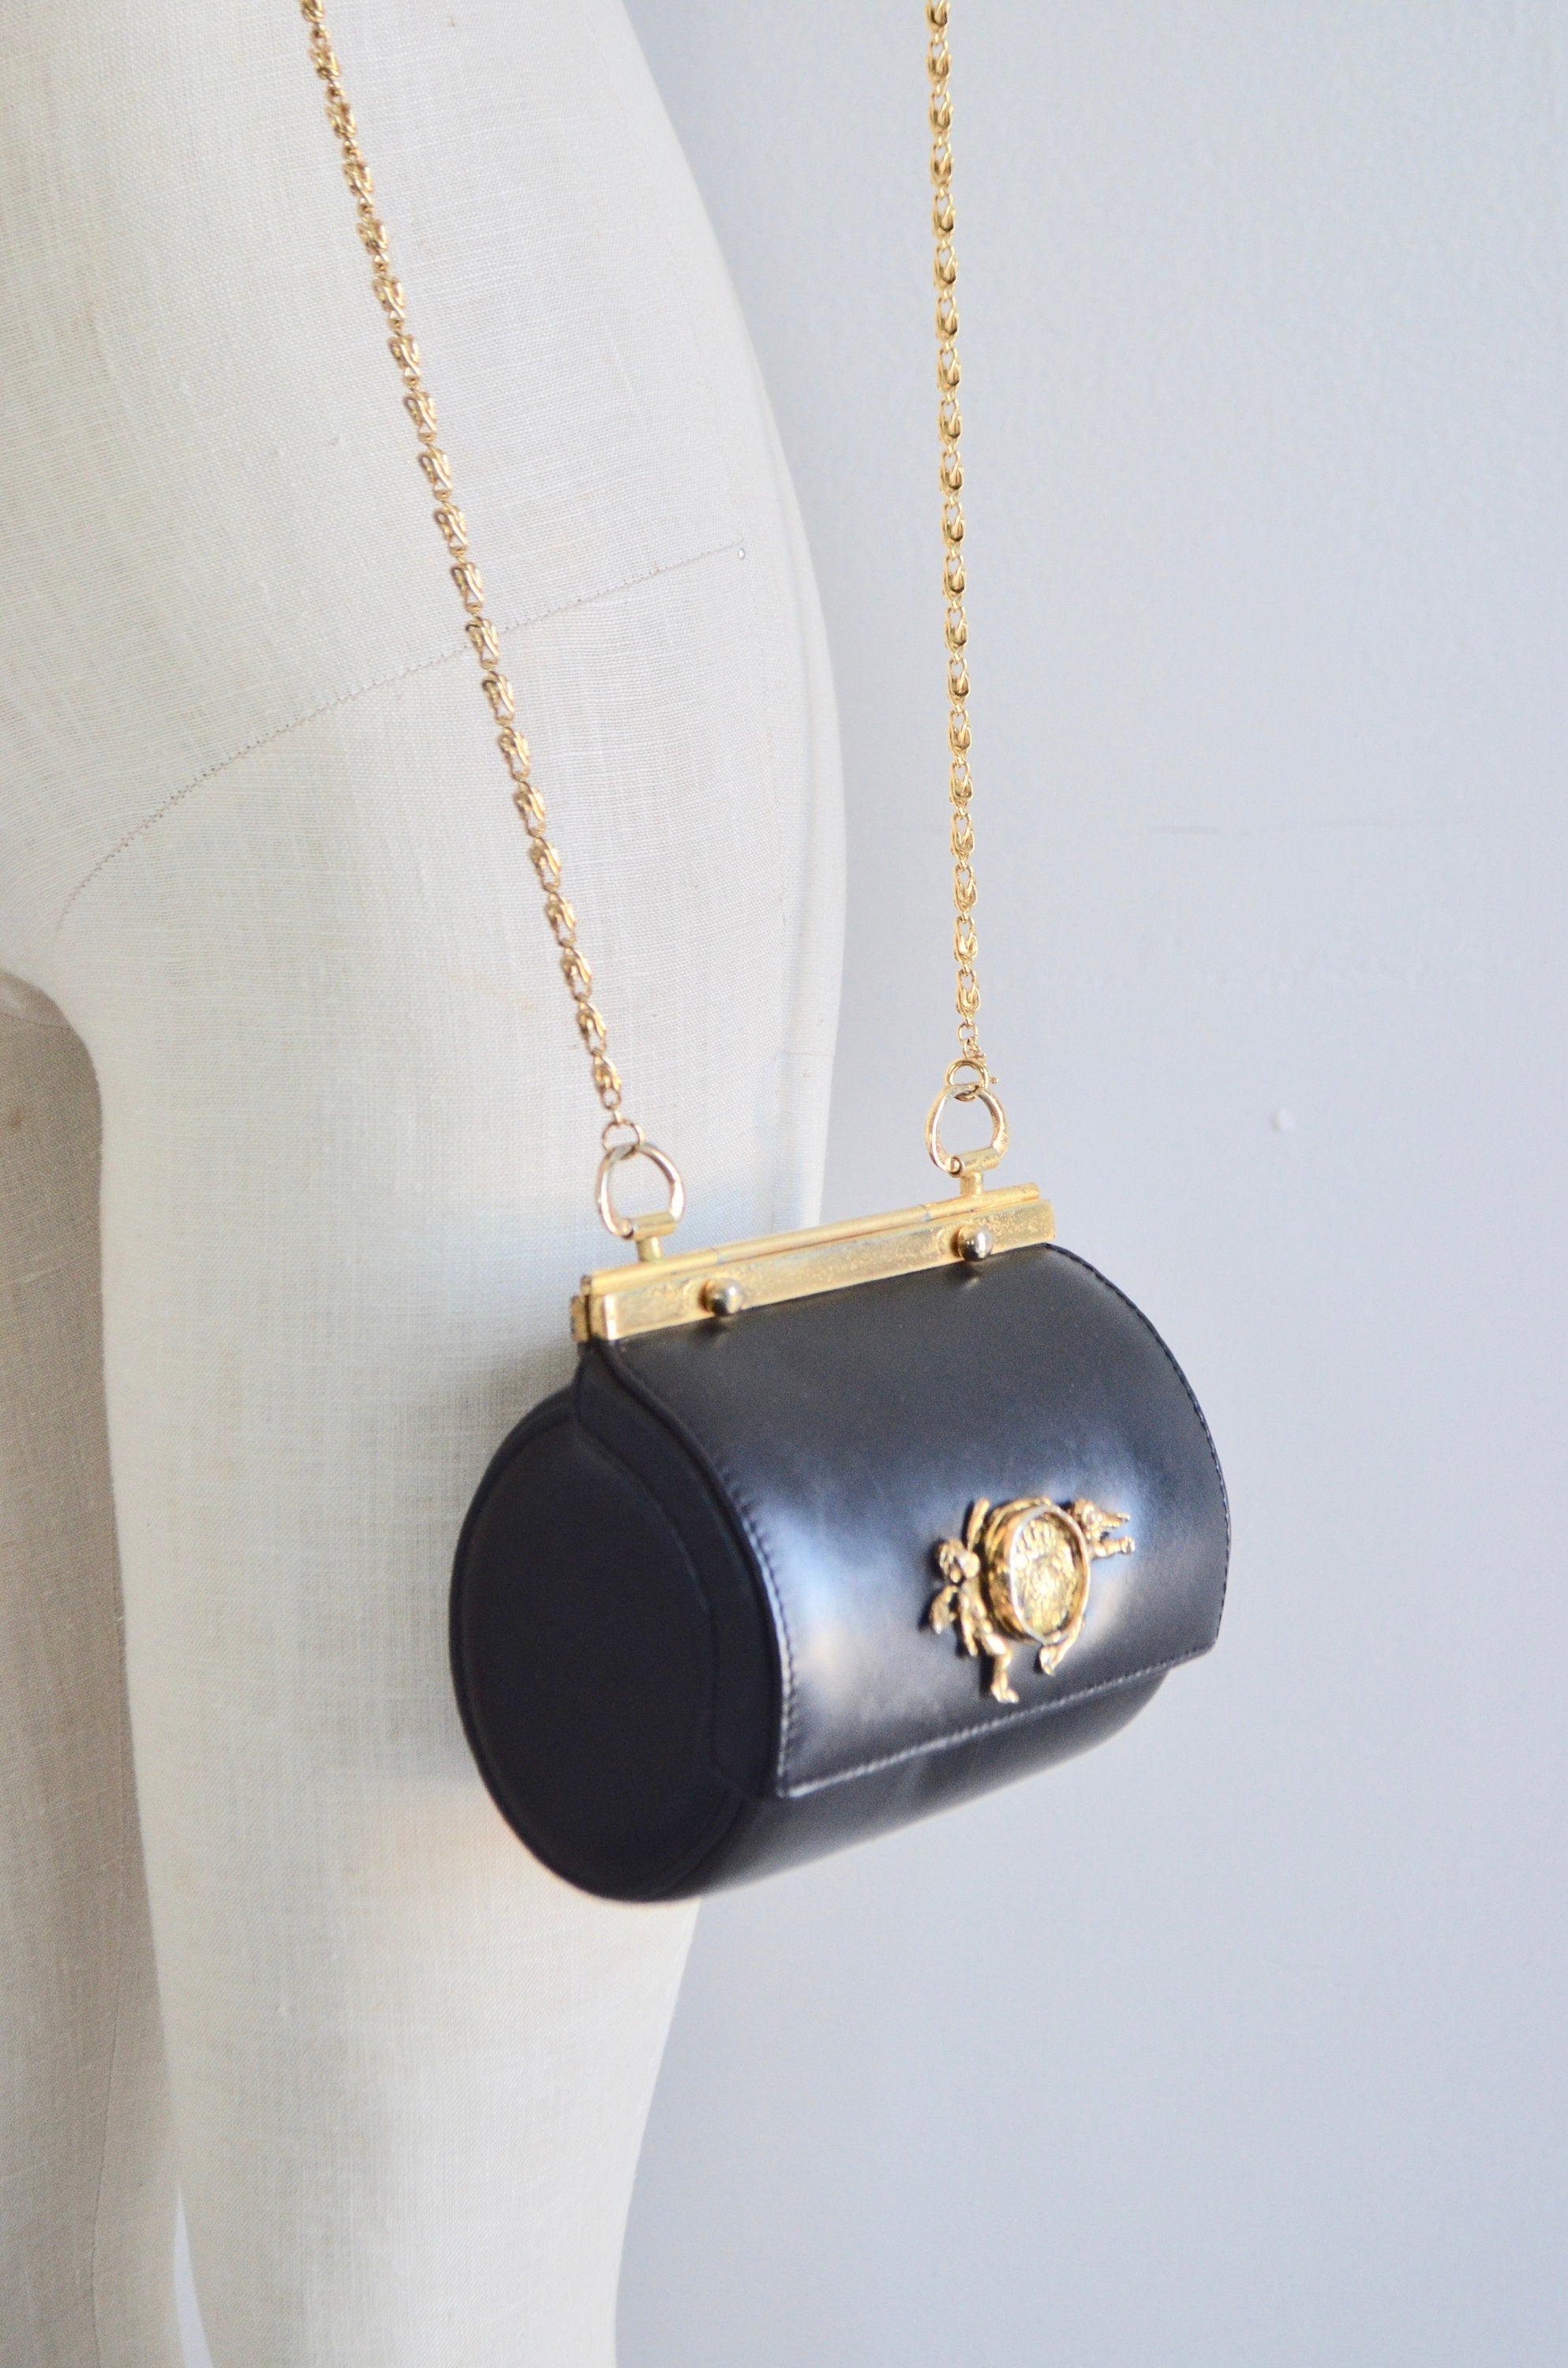 Round Circle Black Leather Hard Mini Crossbody Bag Gold Cupid Cherub Medallion Hardware Handbag